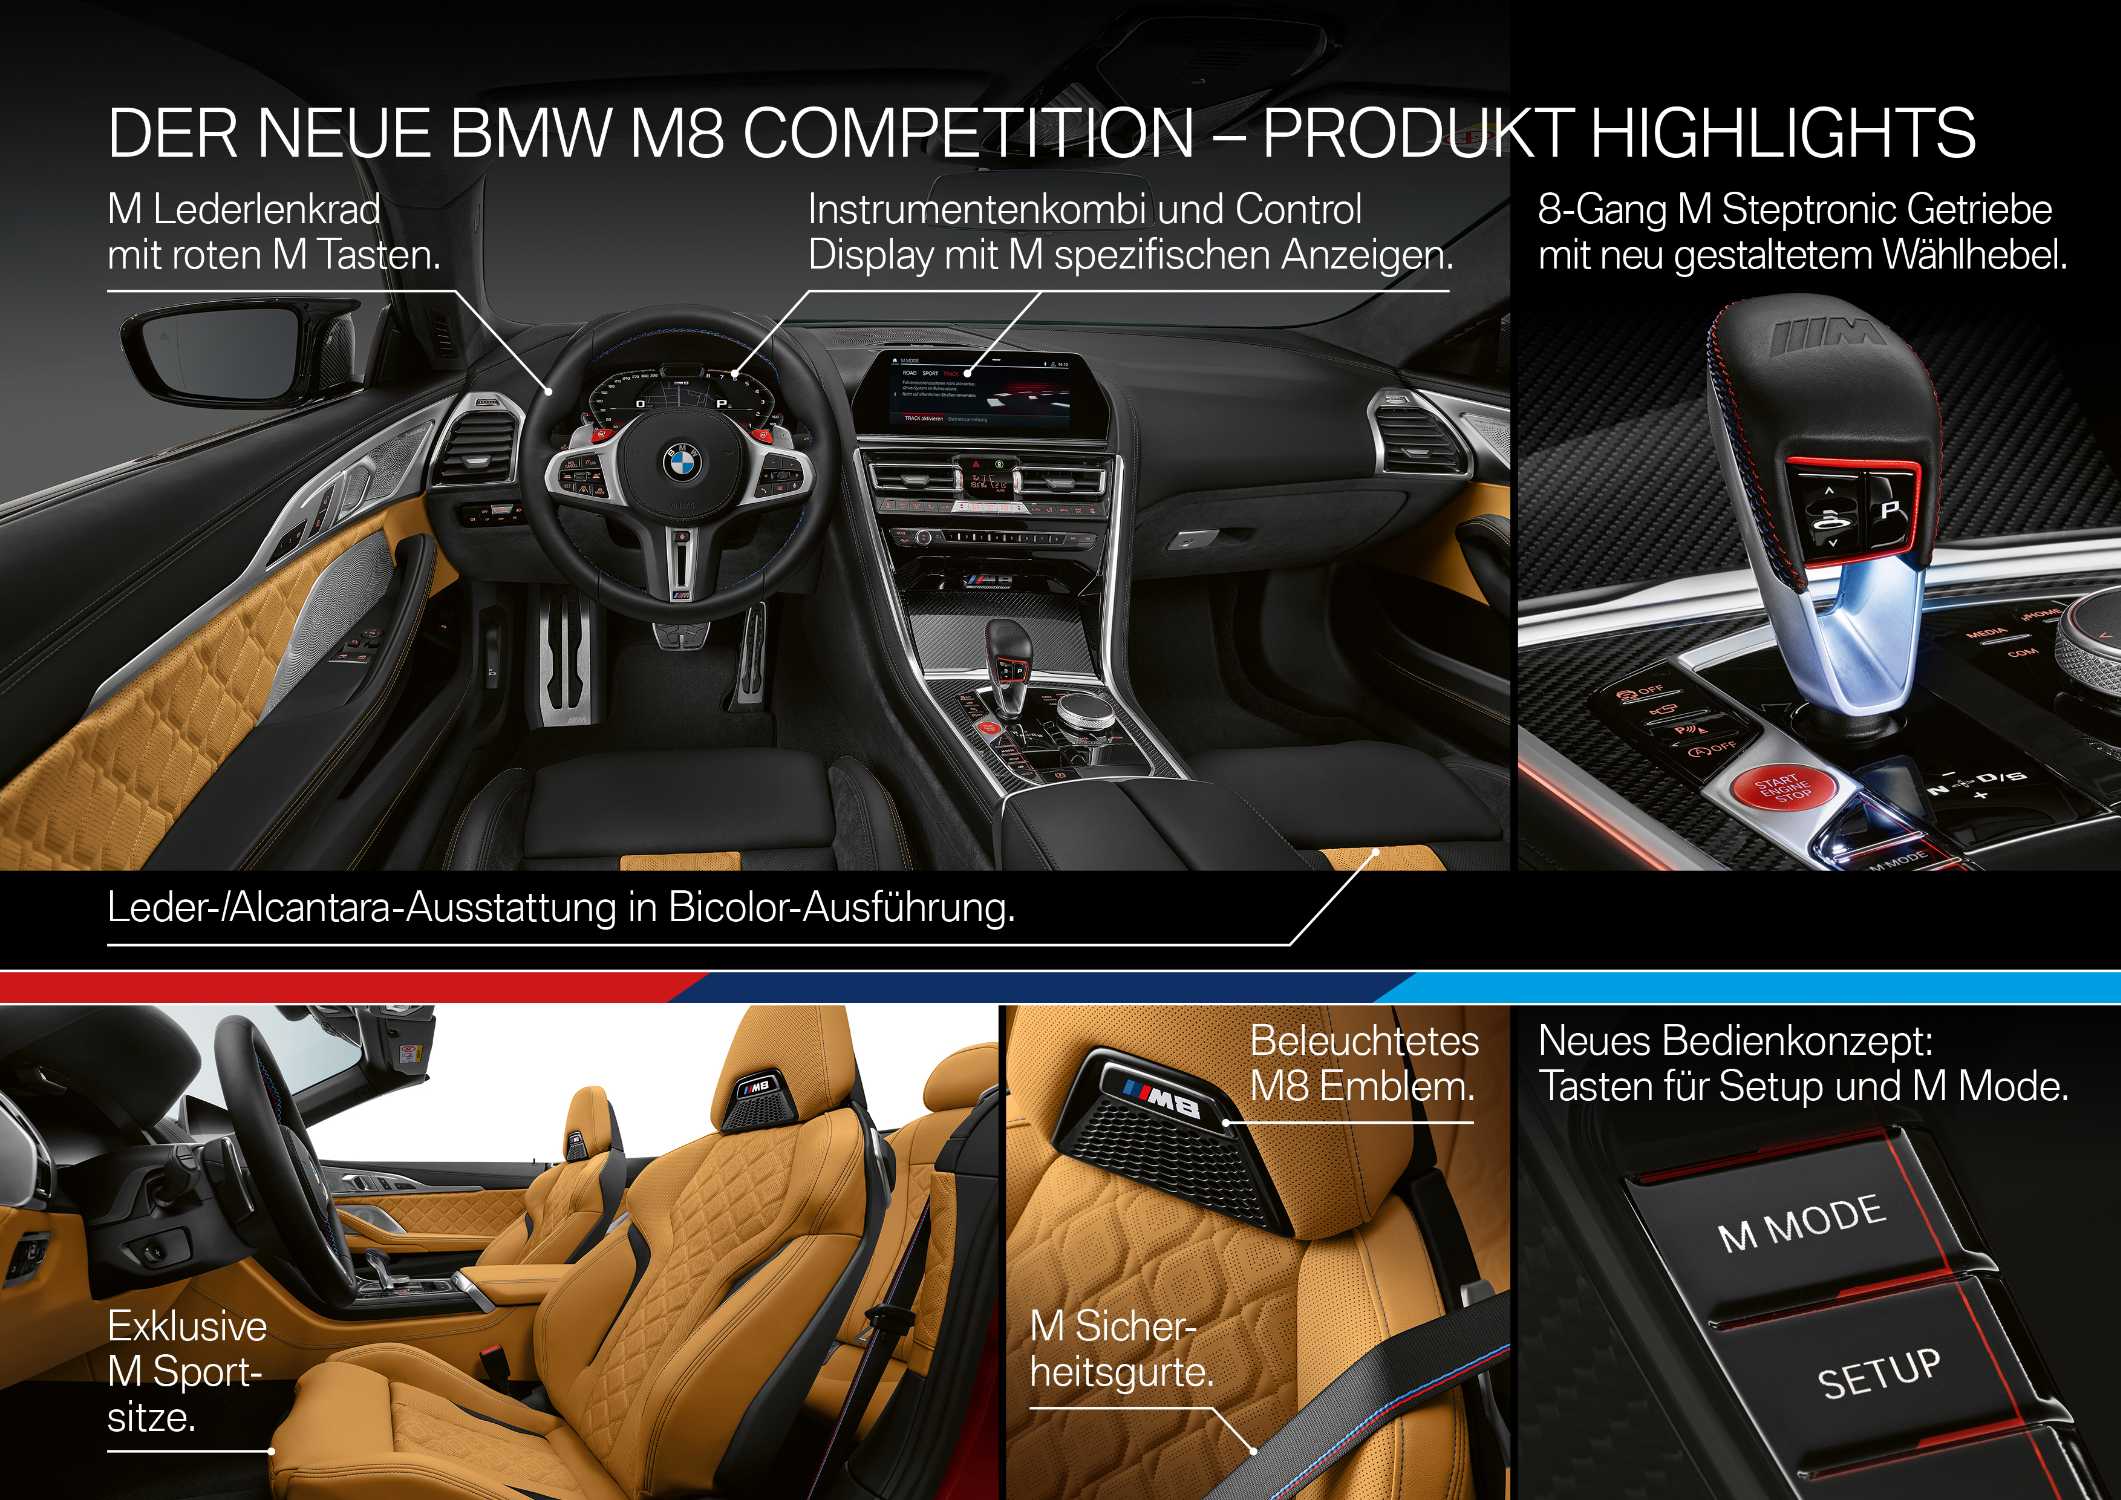 Das neue BMW M8 Competition Coupé und das neue BMW M8 Competition Cabriolet (06/2019).